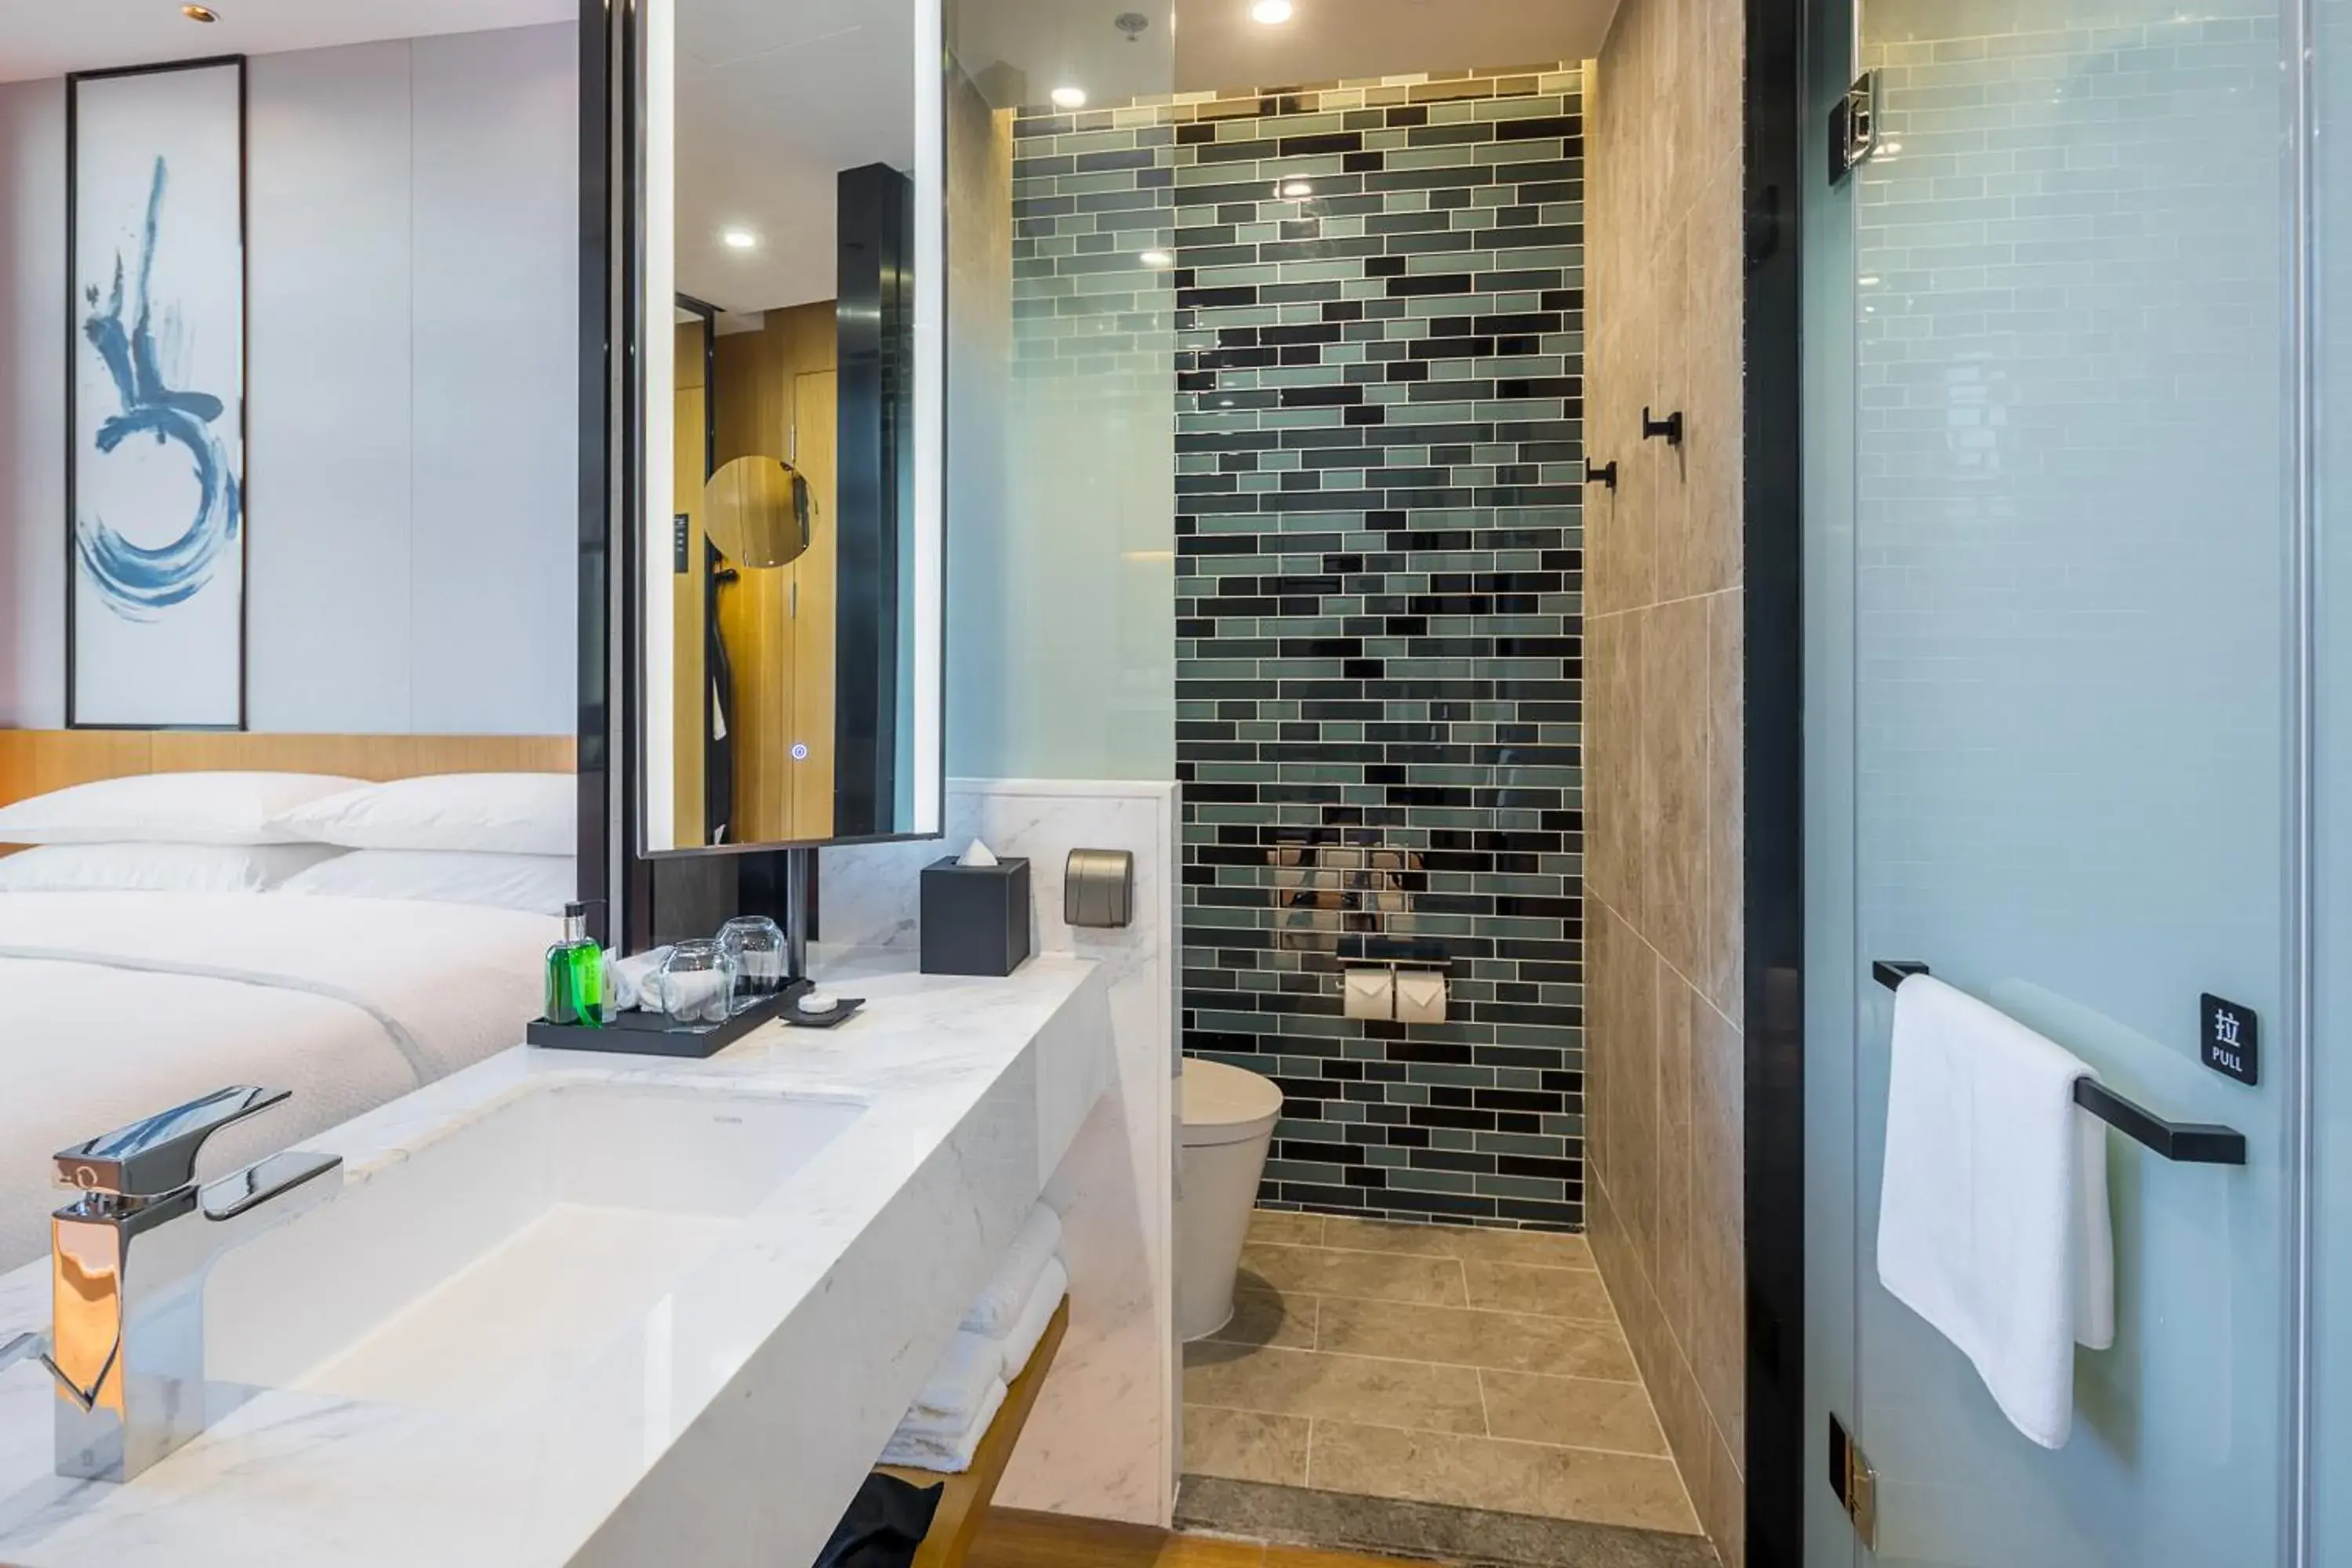 Photo of the whole room, Bathroom in Fairfield by Marriott Shanghai Hongqiao NECC